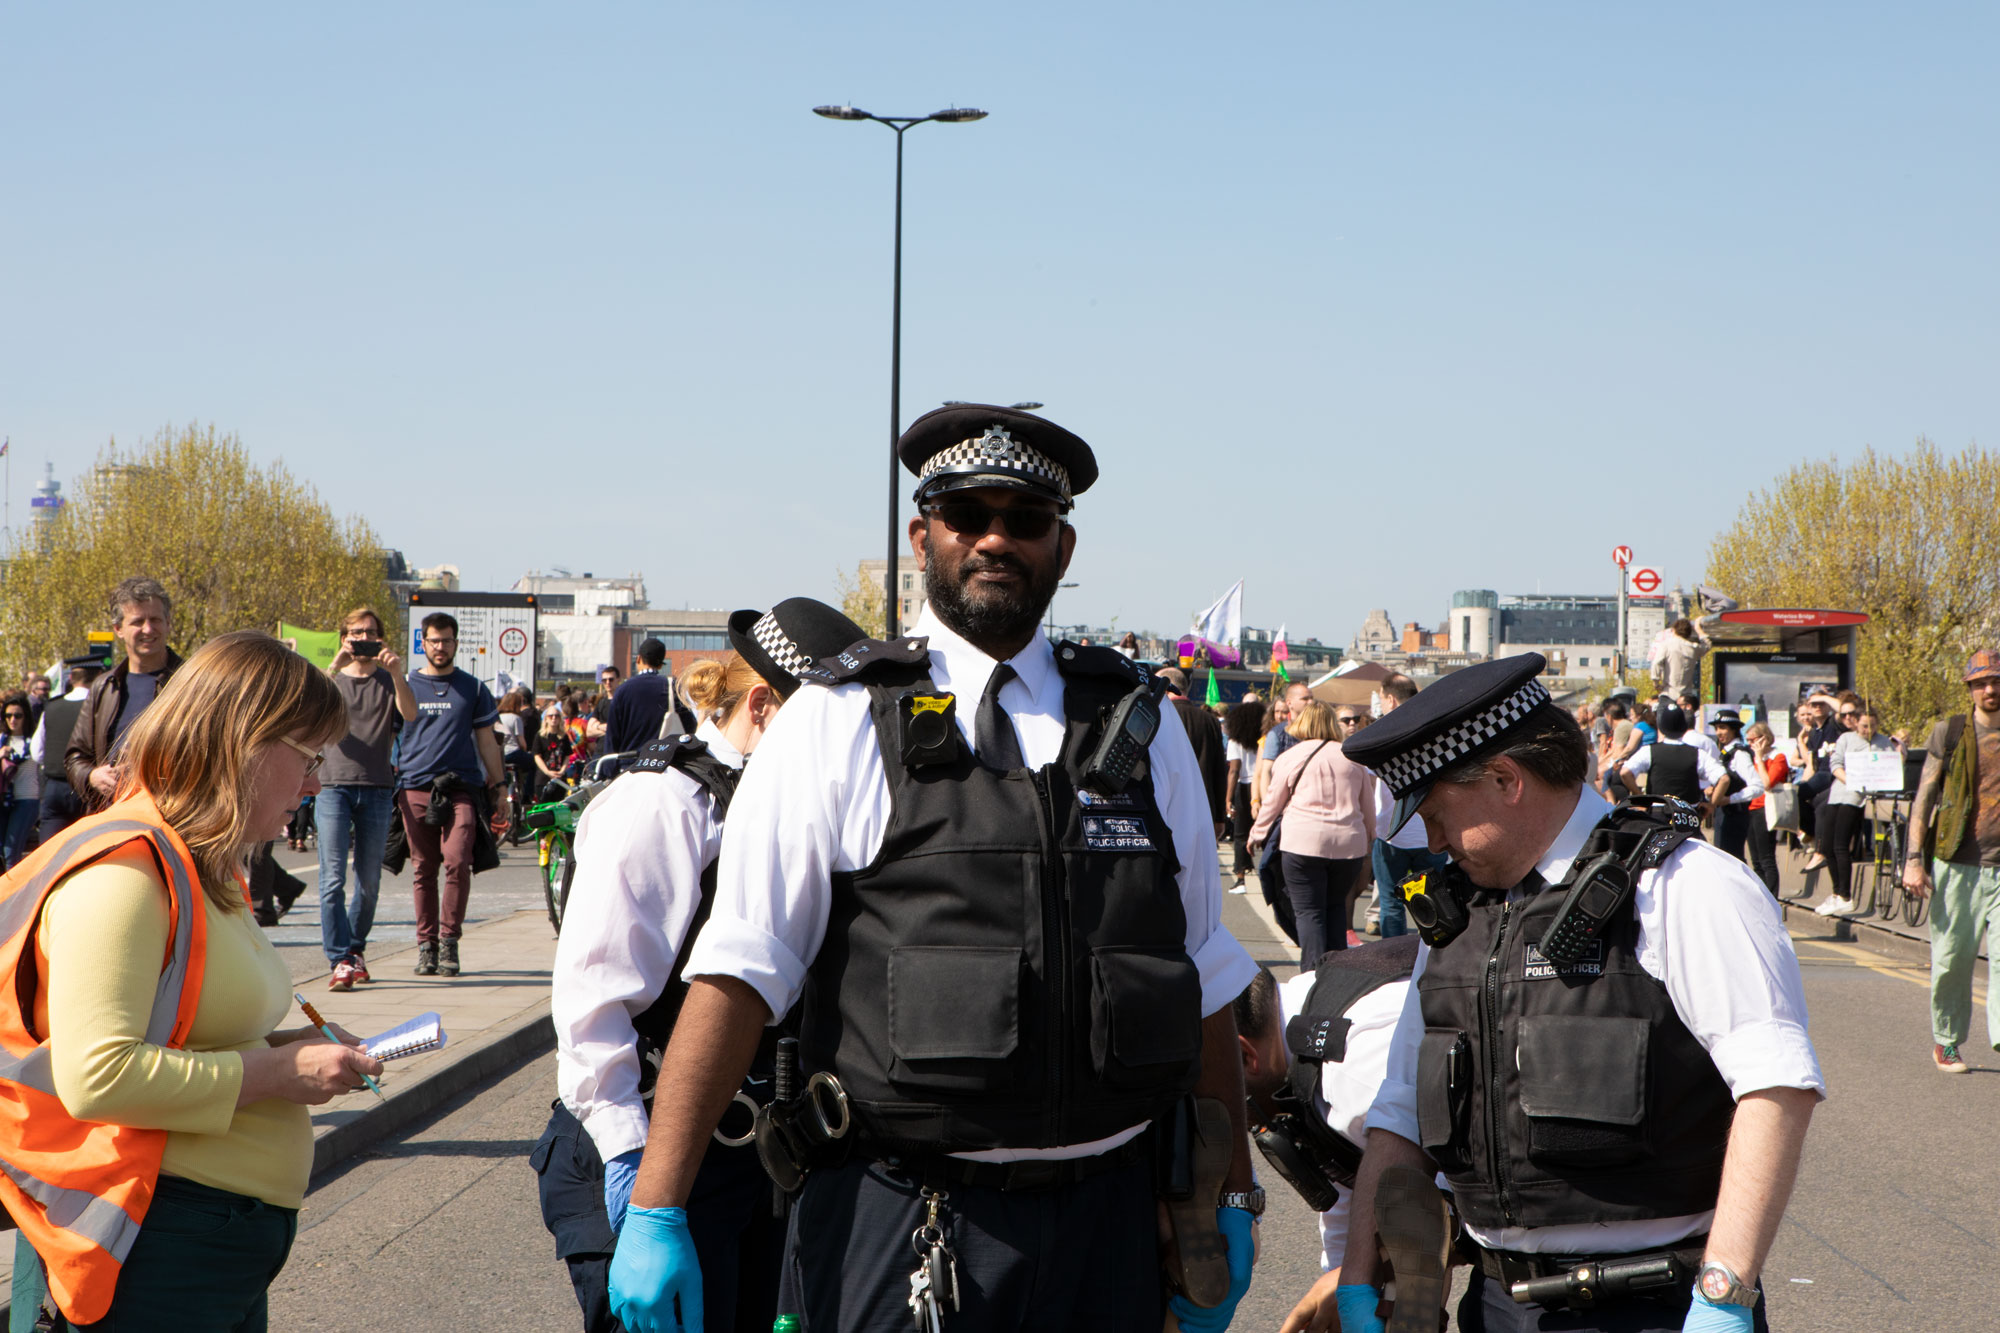 met-police-london-arrests